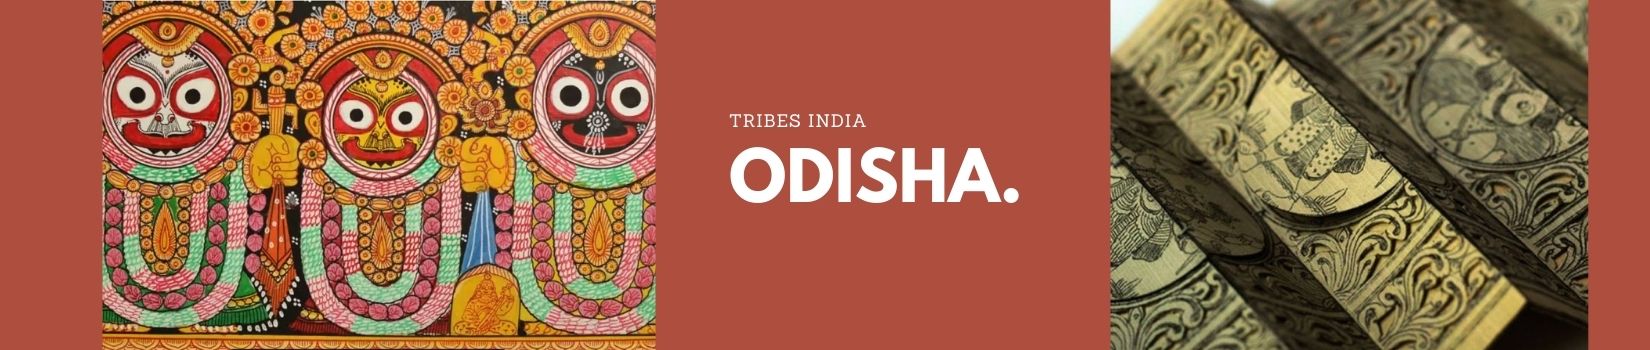 Tribes India Odisha